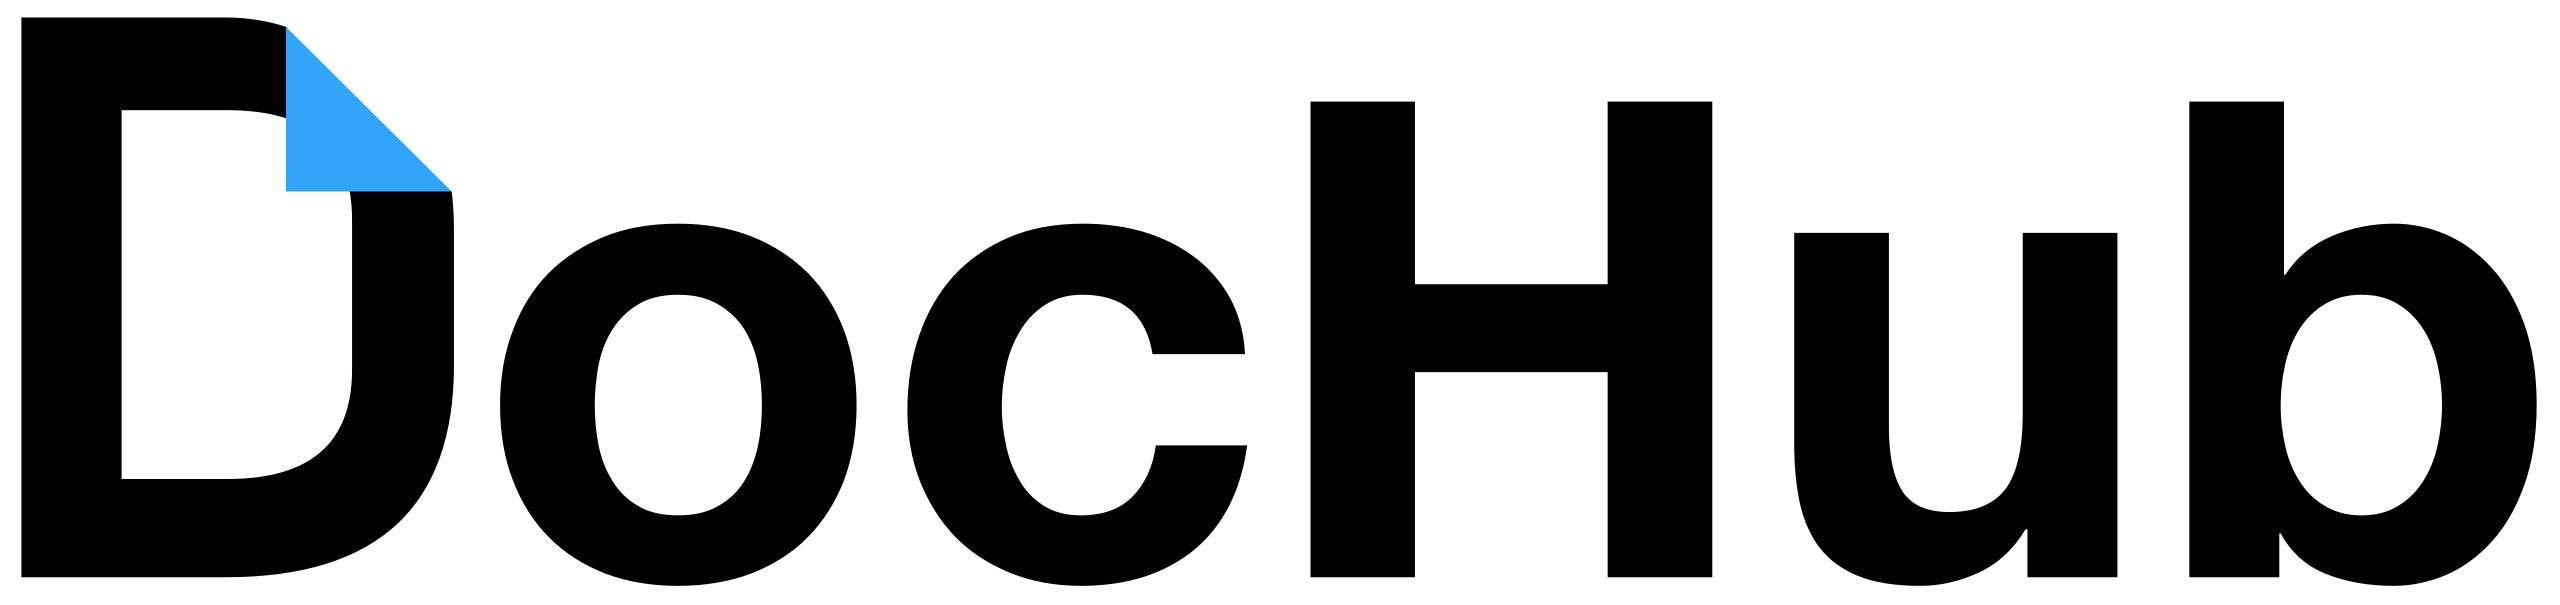 DocHub.com logo